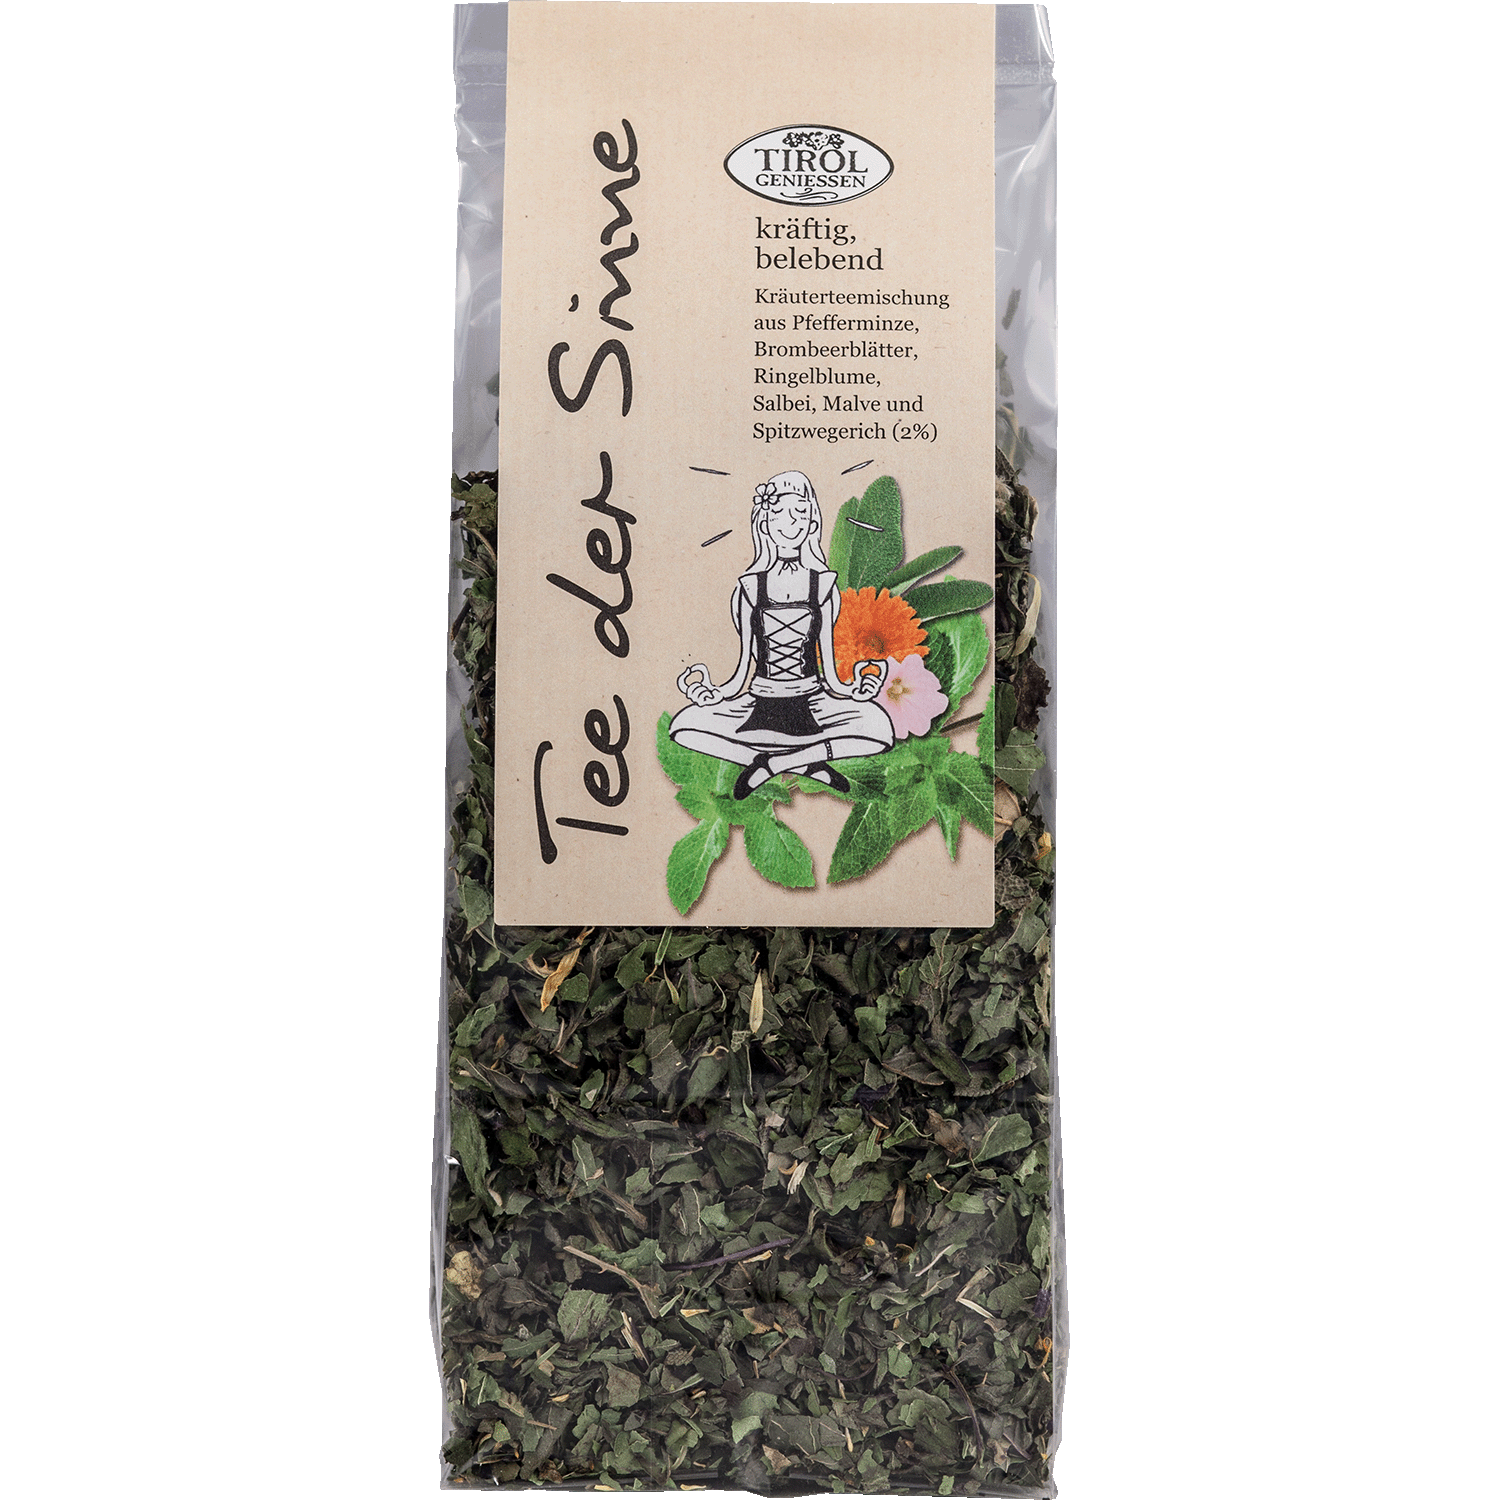 Energizing Herbal Tea from Austria from Tirol Geniessen